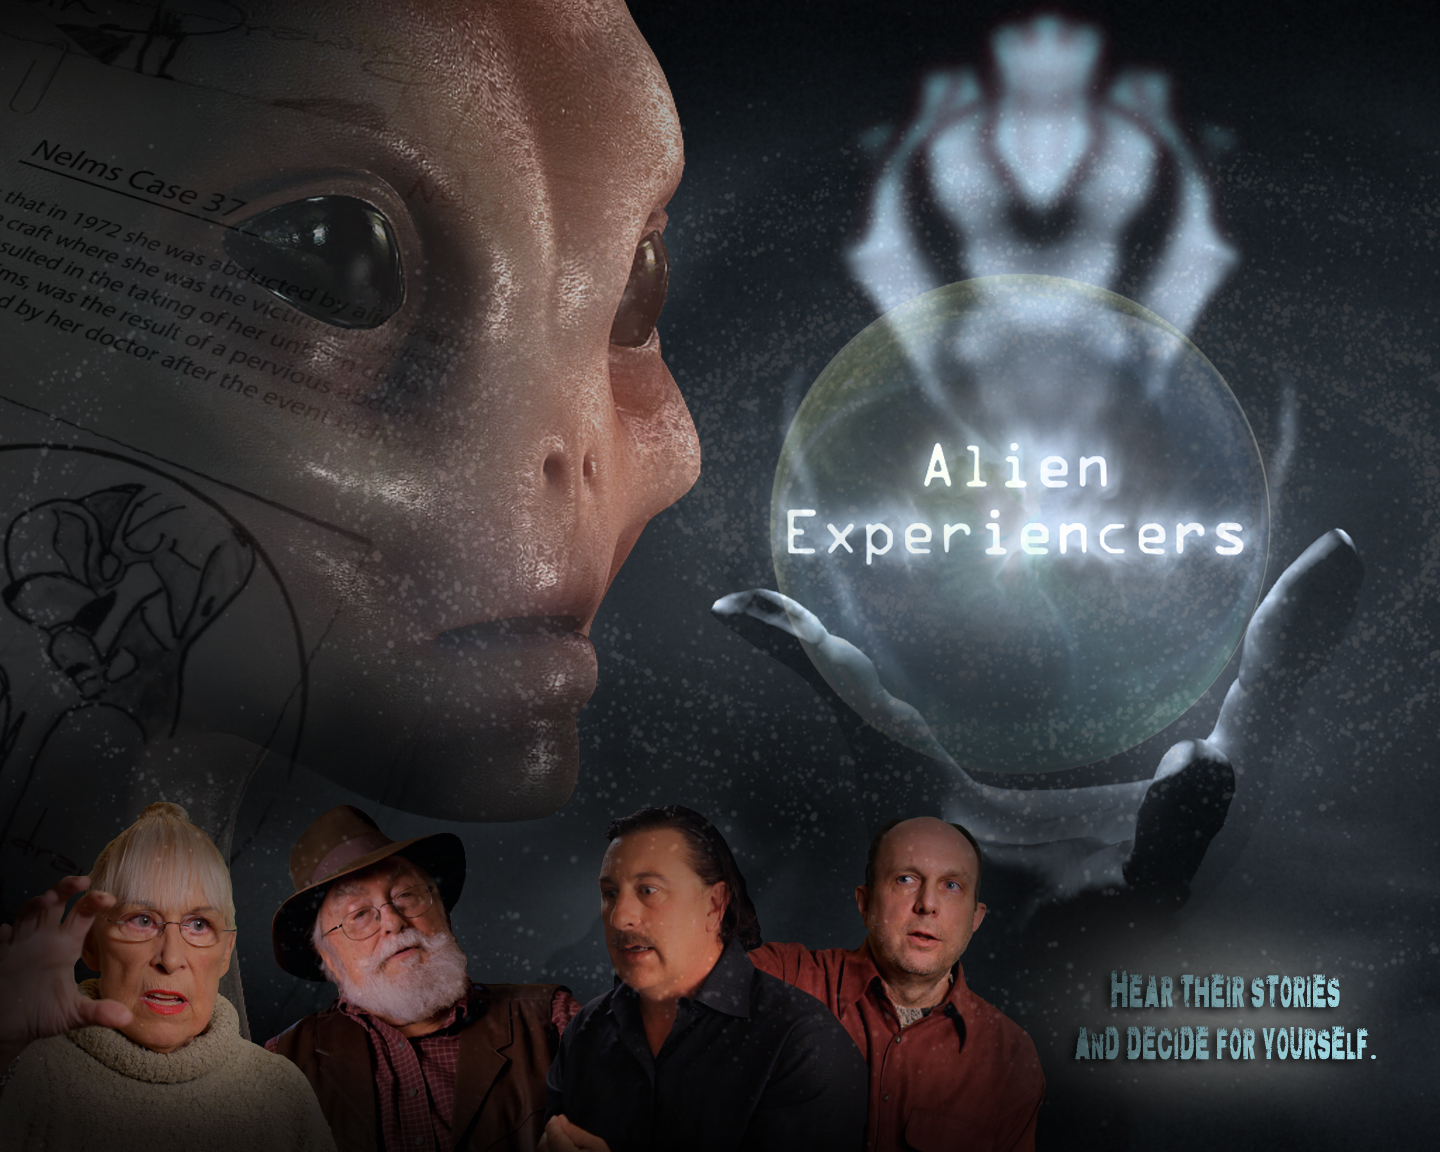 Alien Experiencers